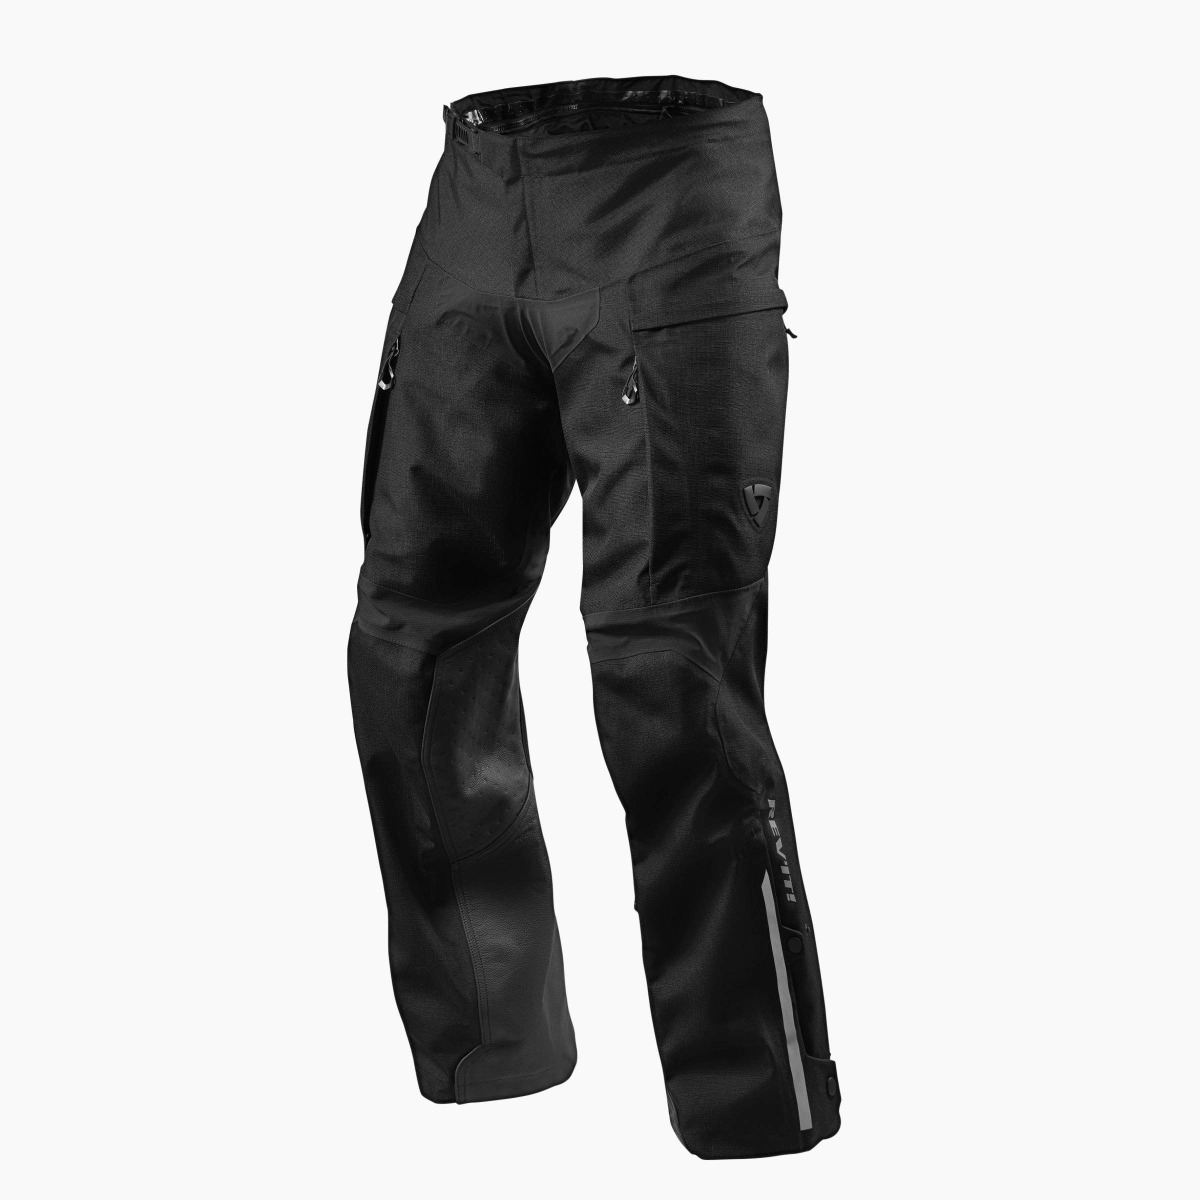 REV'IT! Component H2O Long Black Motorcycle Pants Size L